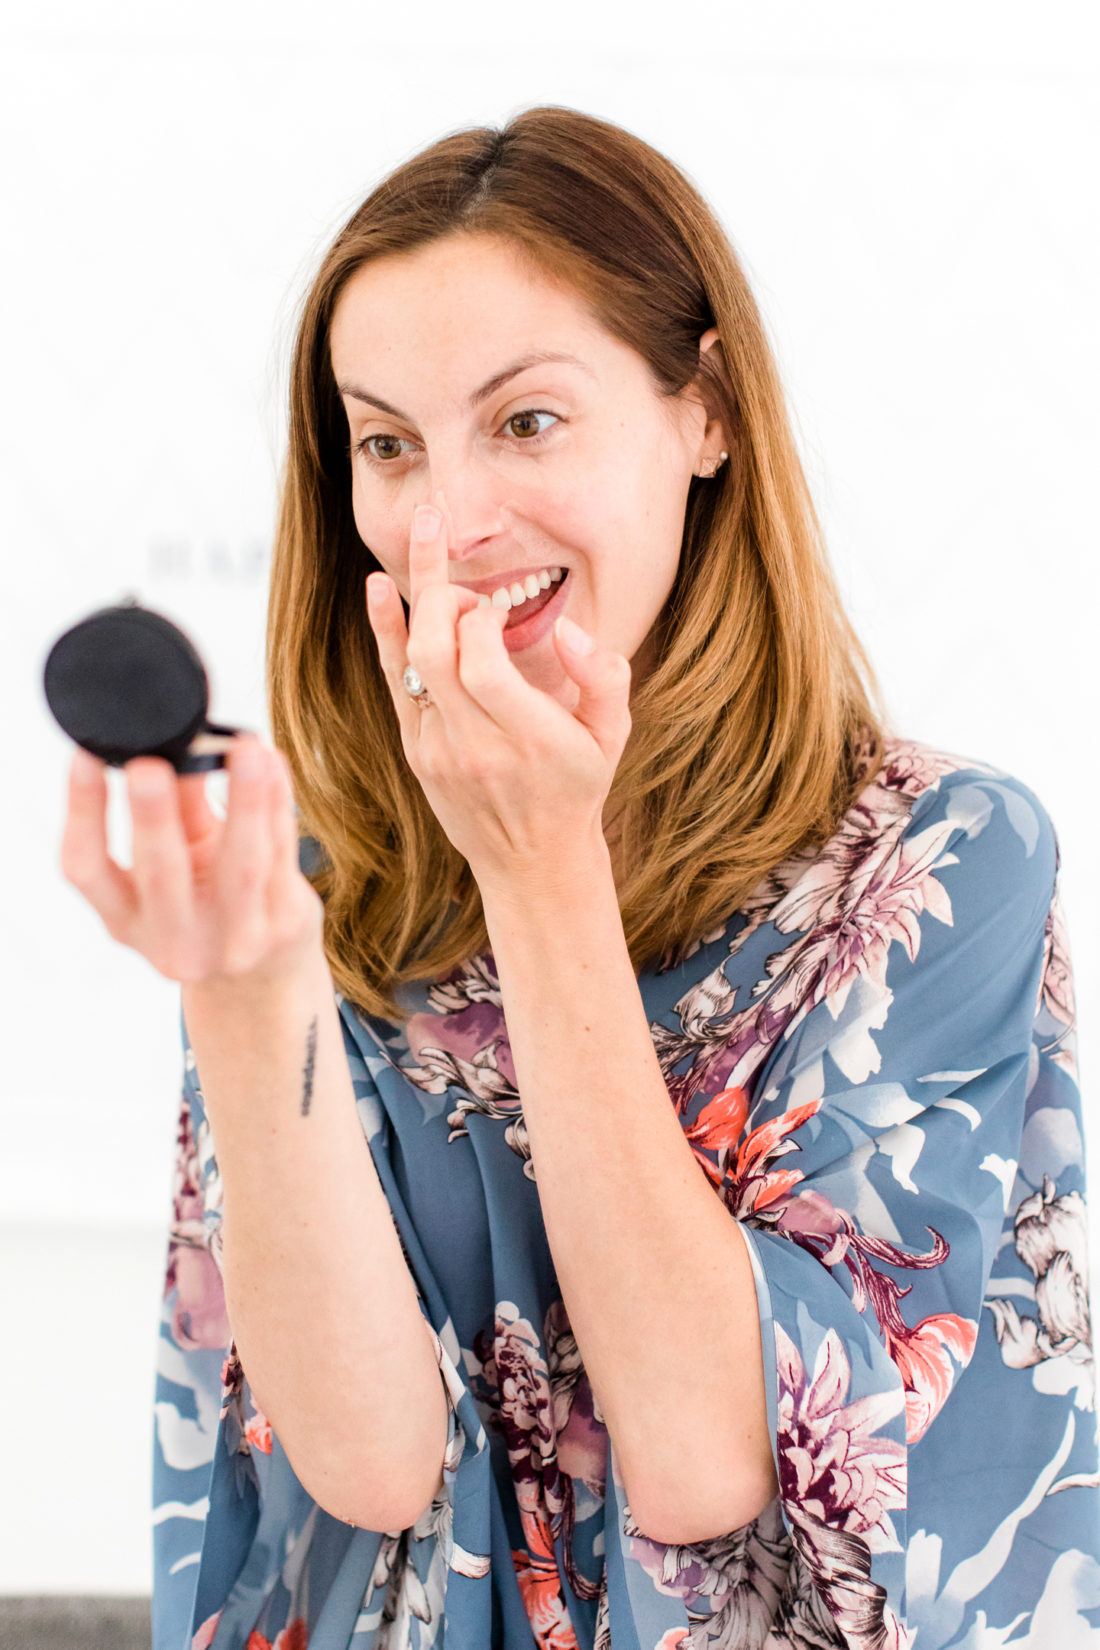 Eva Amurri Martino applies concealer as part of her photo shoot makeup tutorial